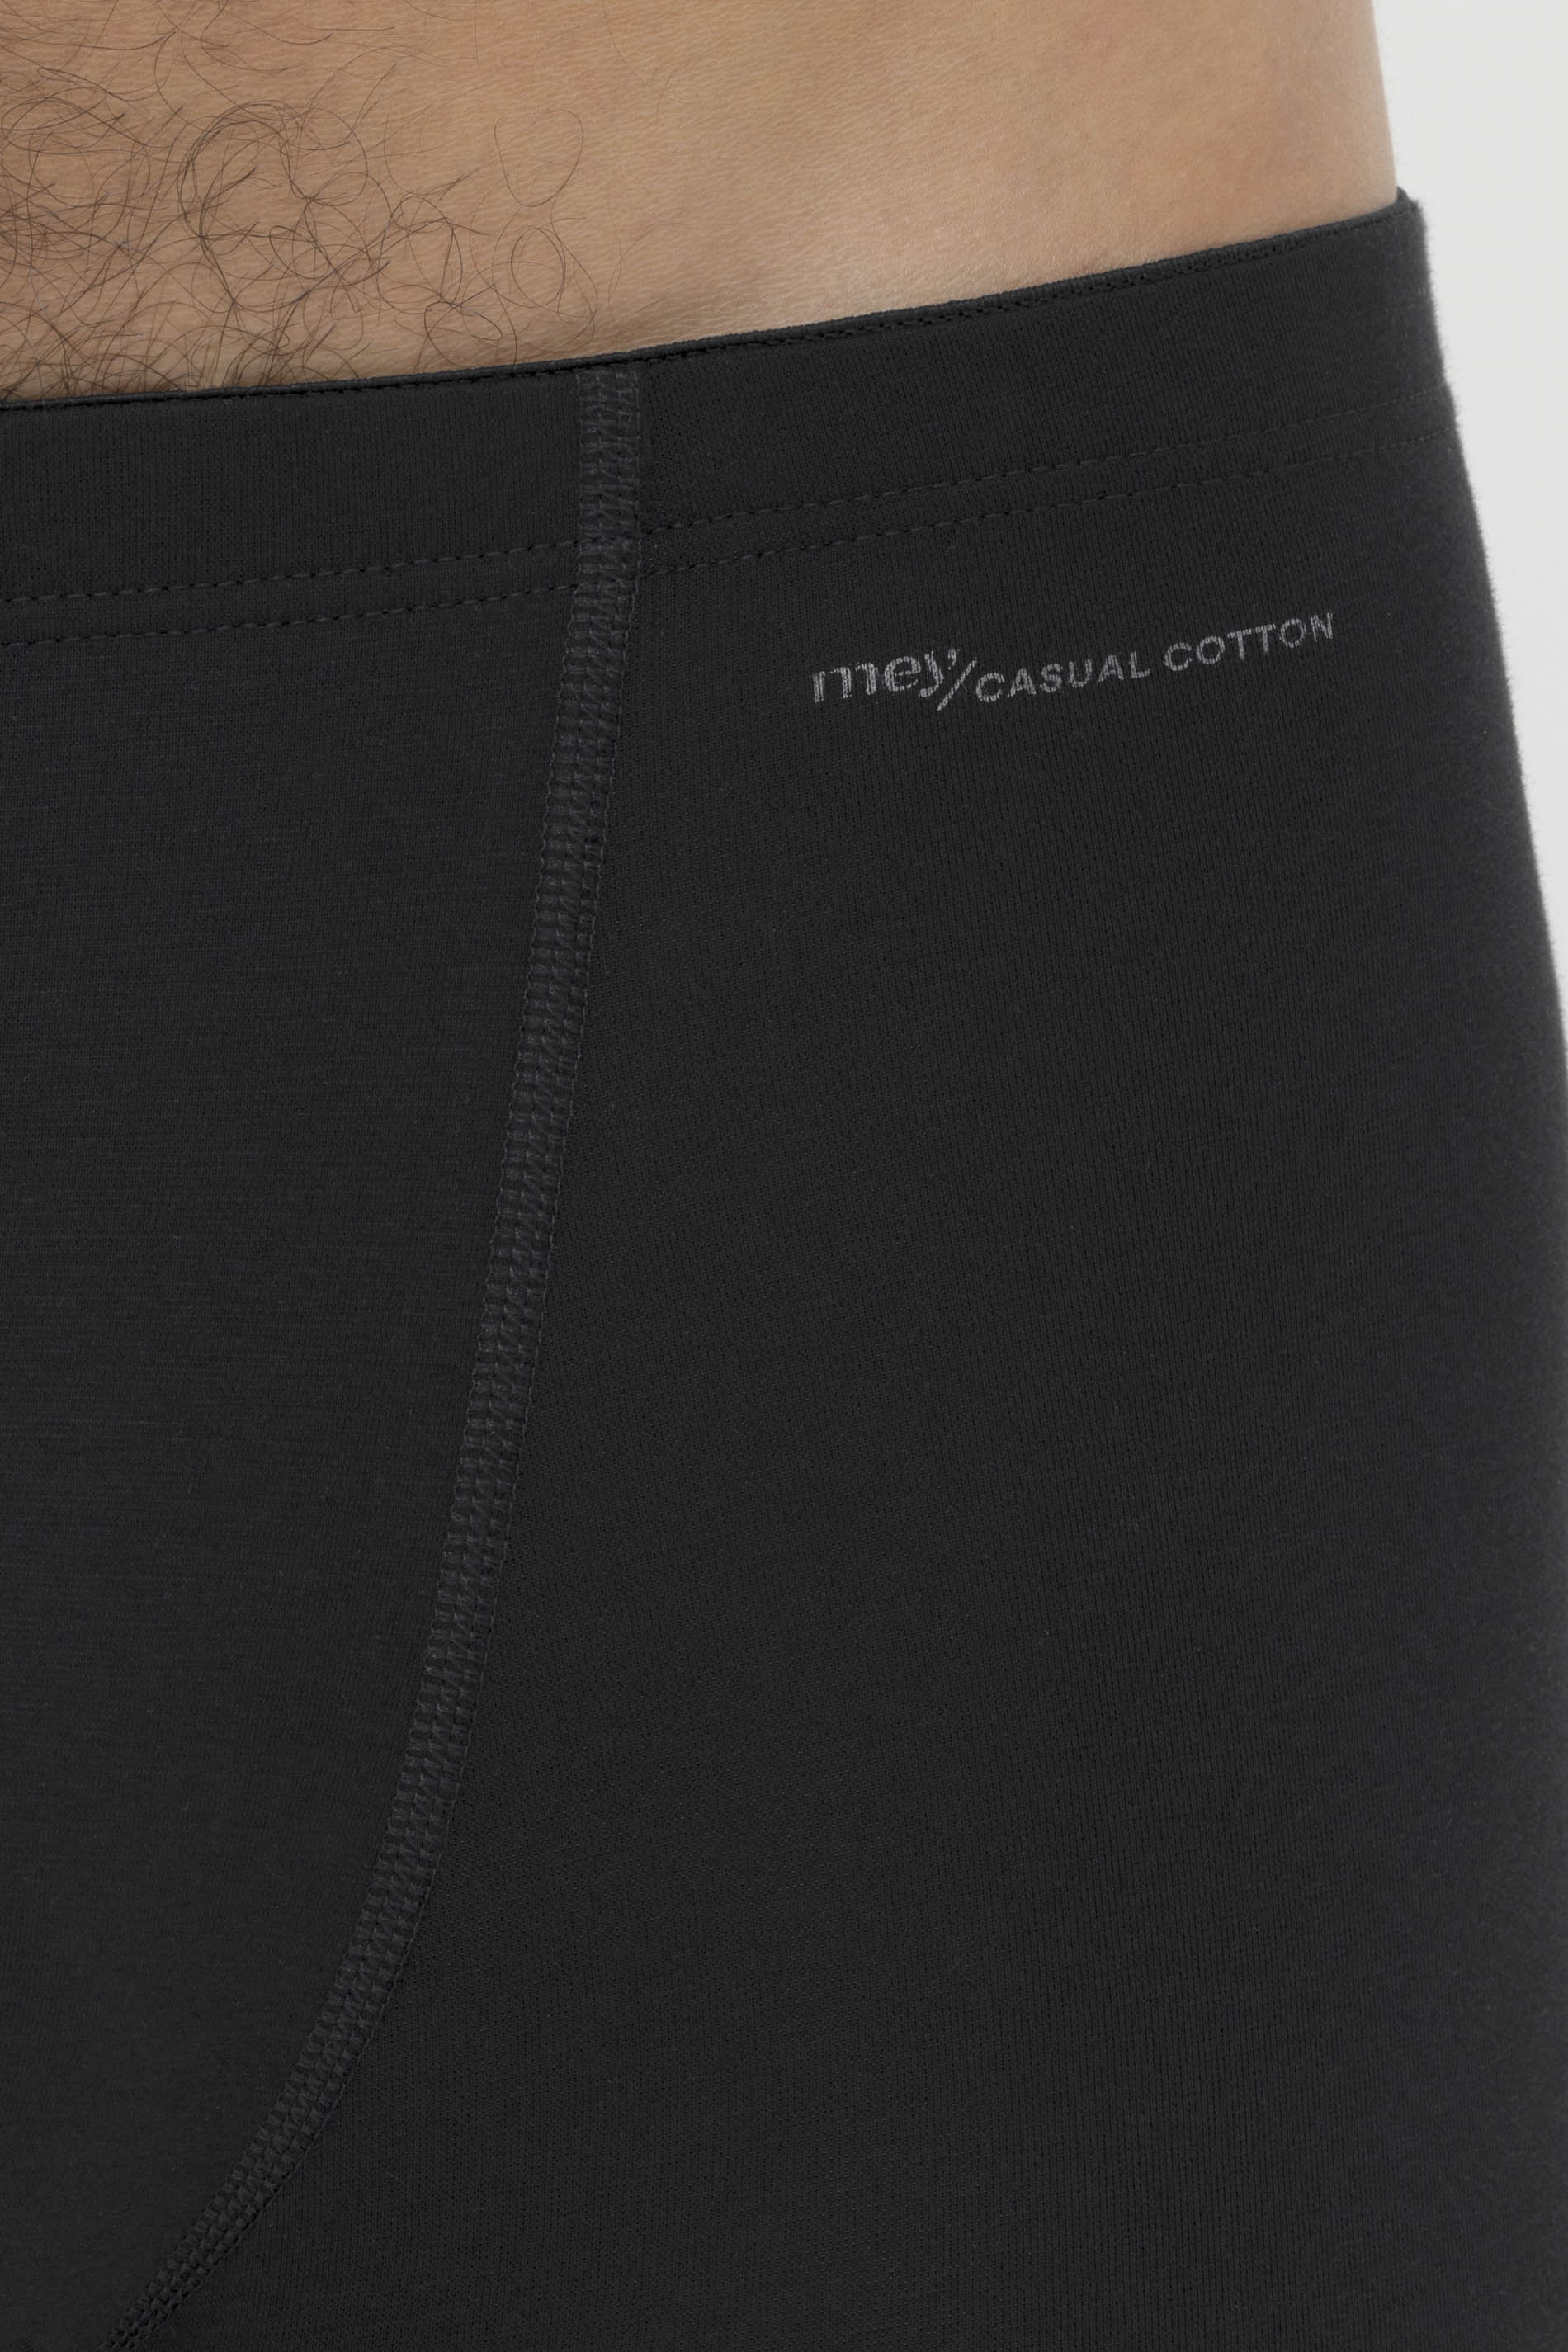 Shorty Black Serie Casual Cotton Detail View 01 | mey®